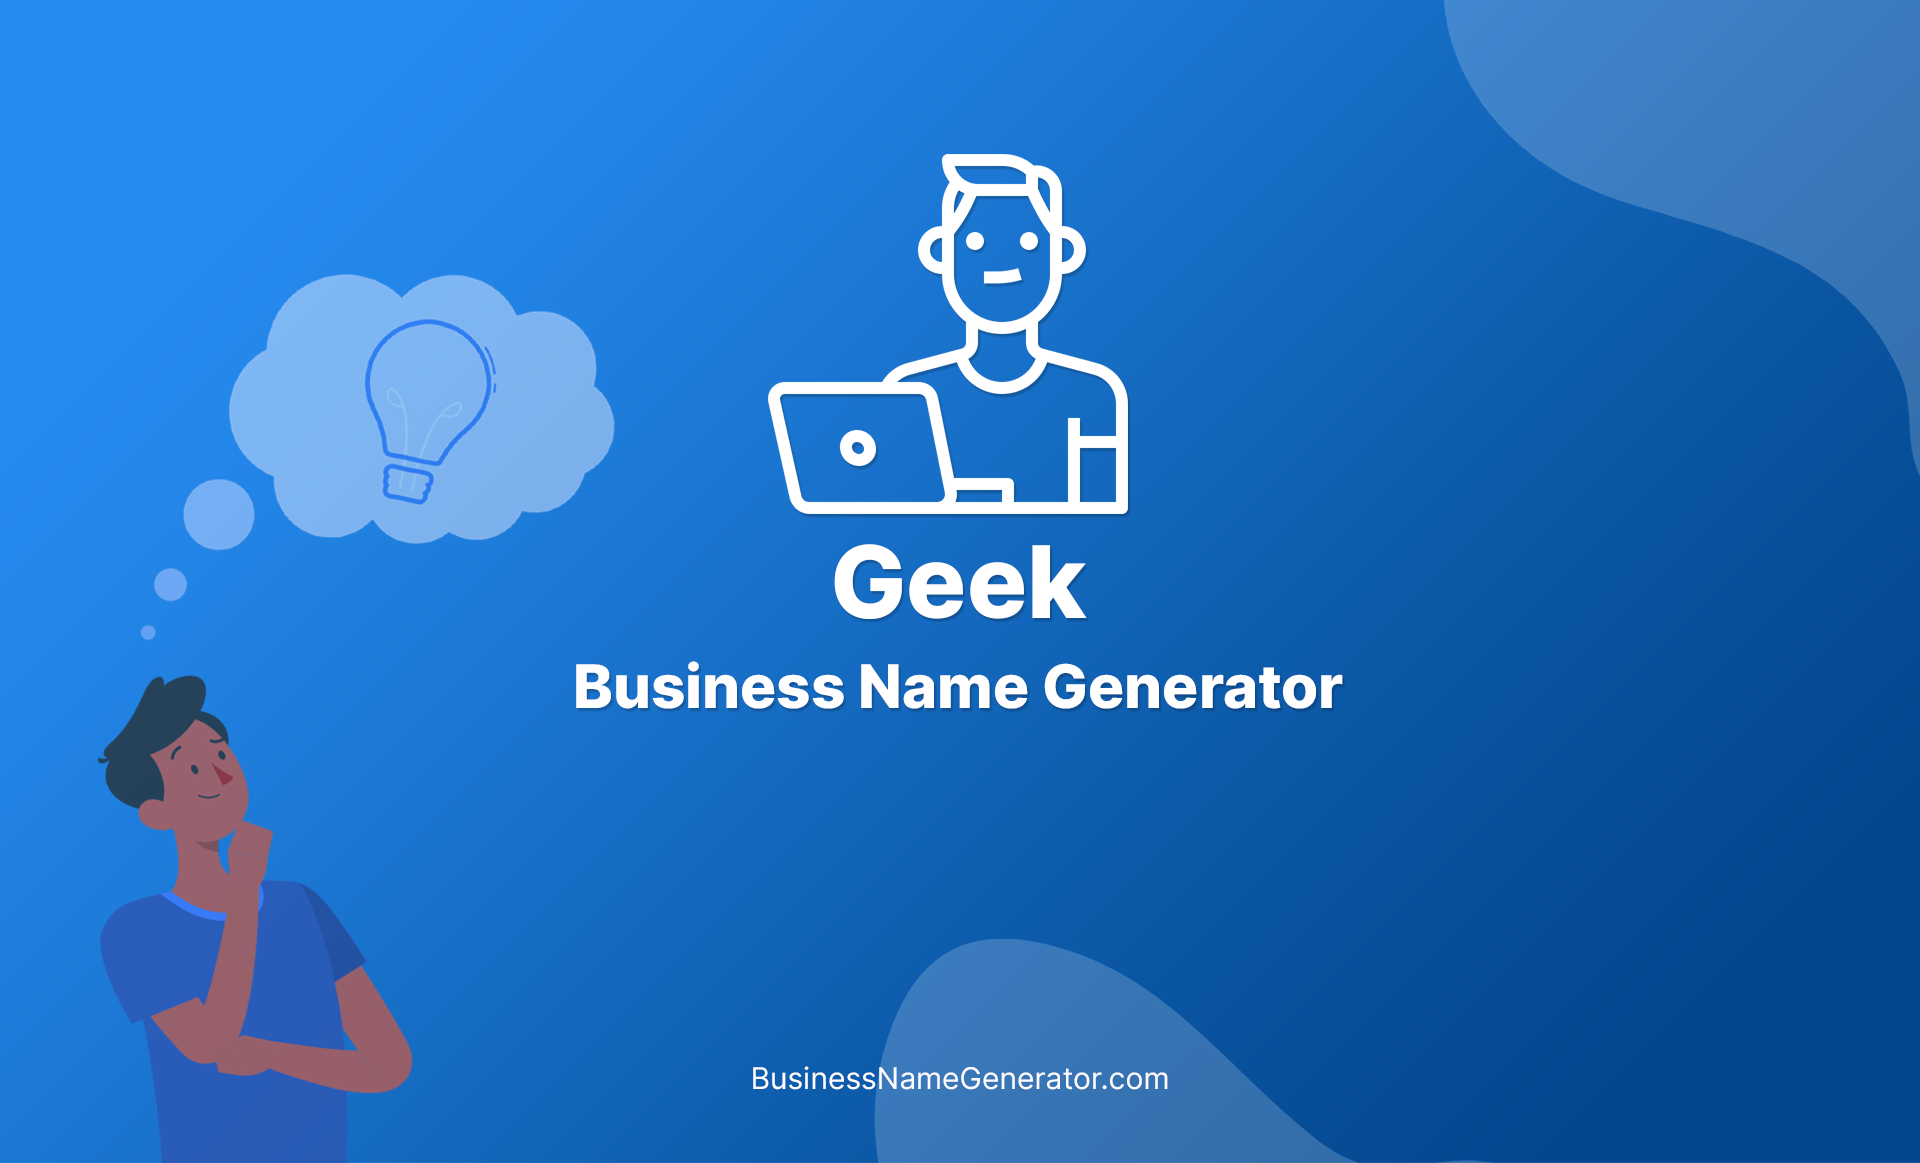 Geek Business Name Generator